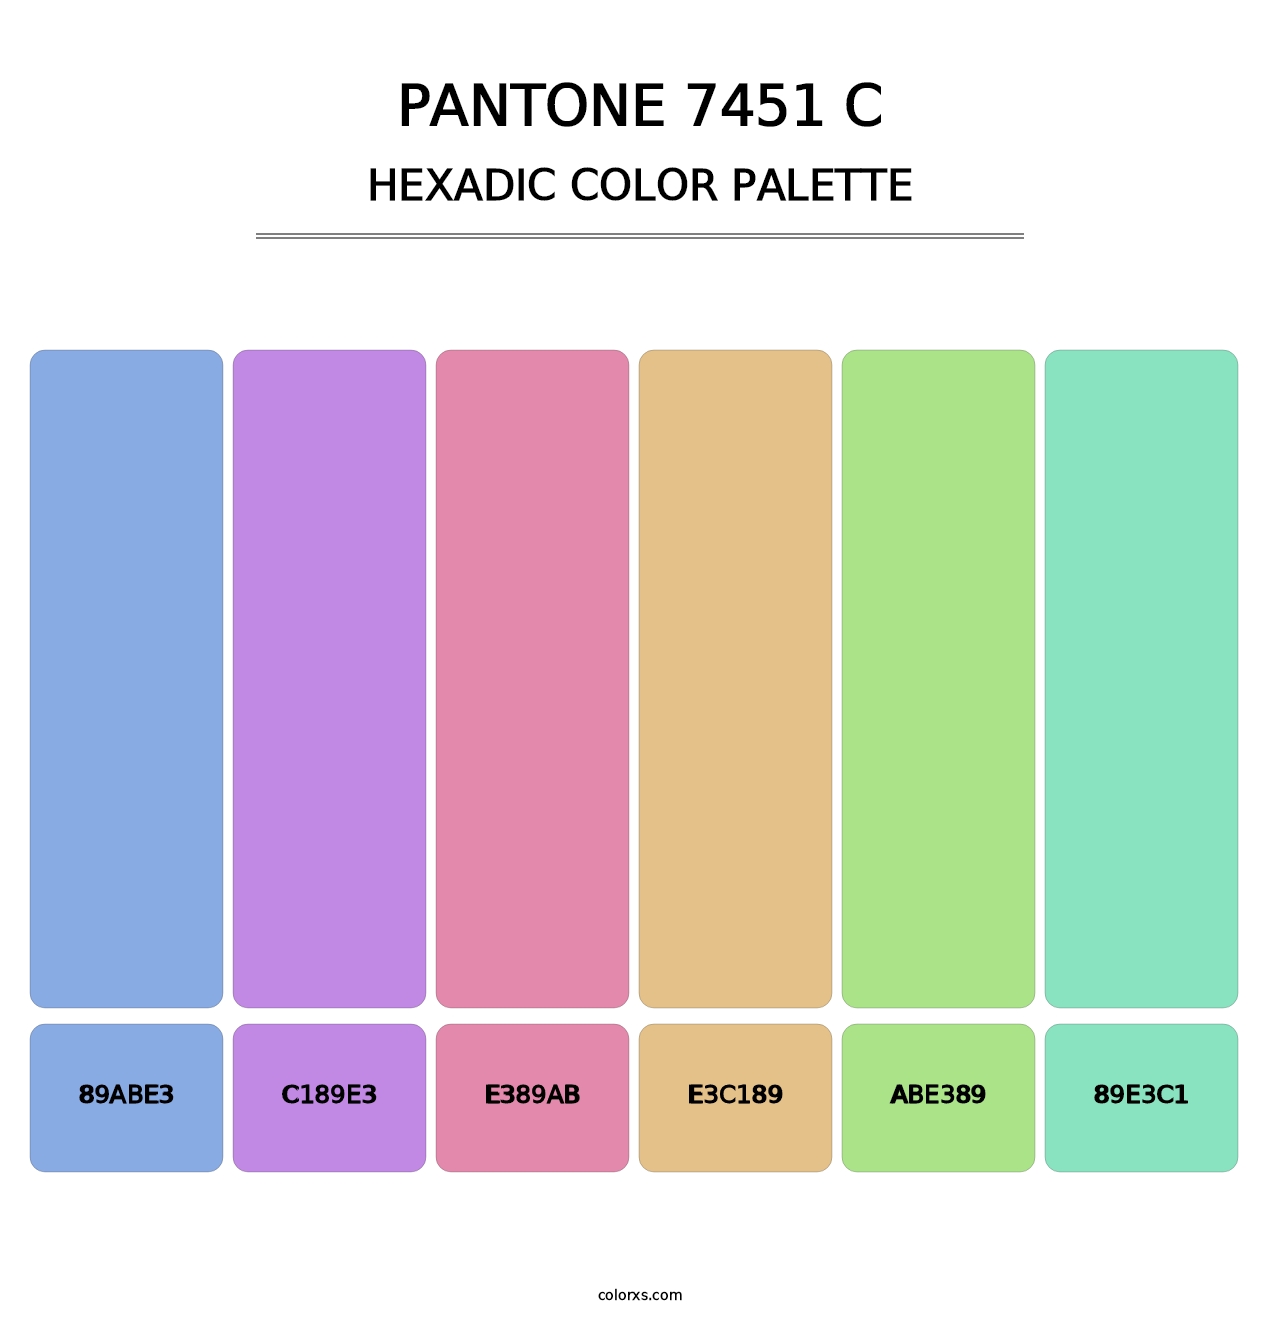 PANTONE 7451 C - Hexadic Color Palette